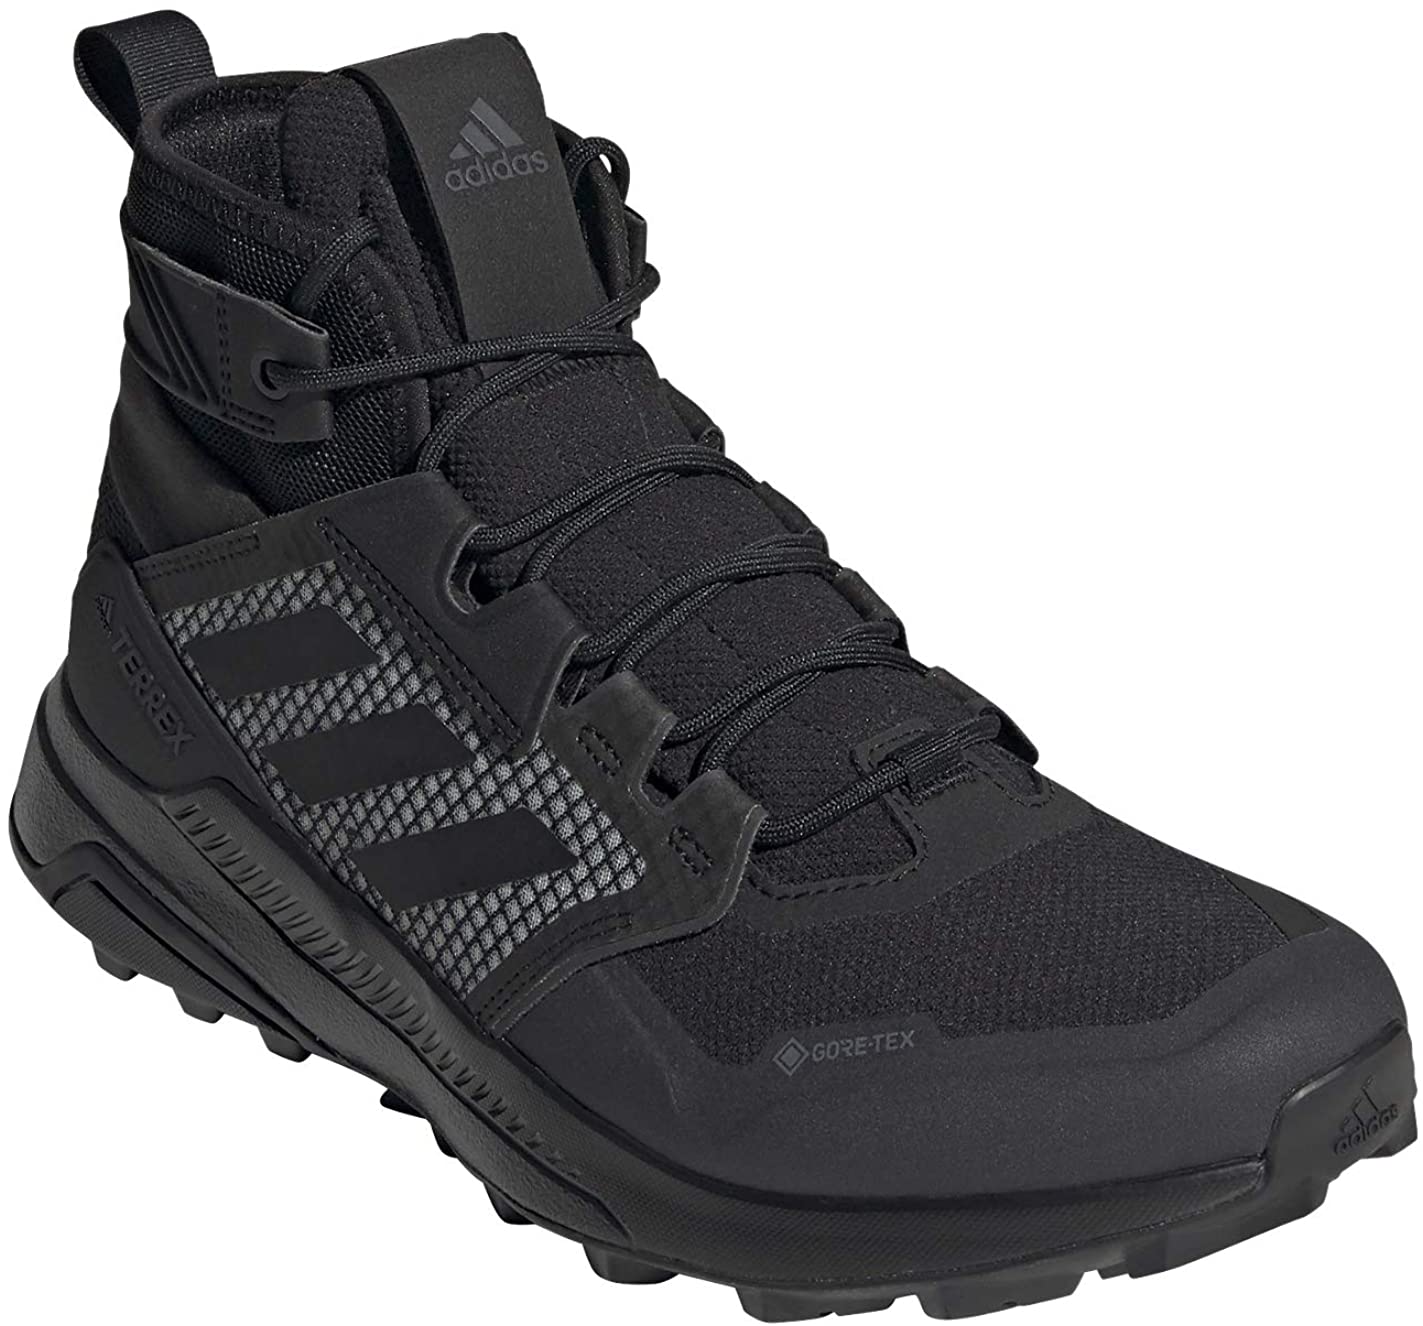 Men's adidas Terrex Trailmaker Mid Gore-TEX Hiking Shoe in Cblack/Cblack/Dgsogr from the side